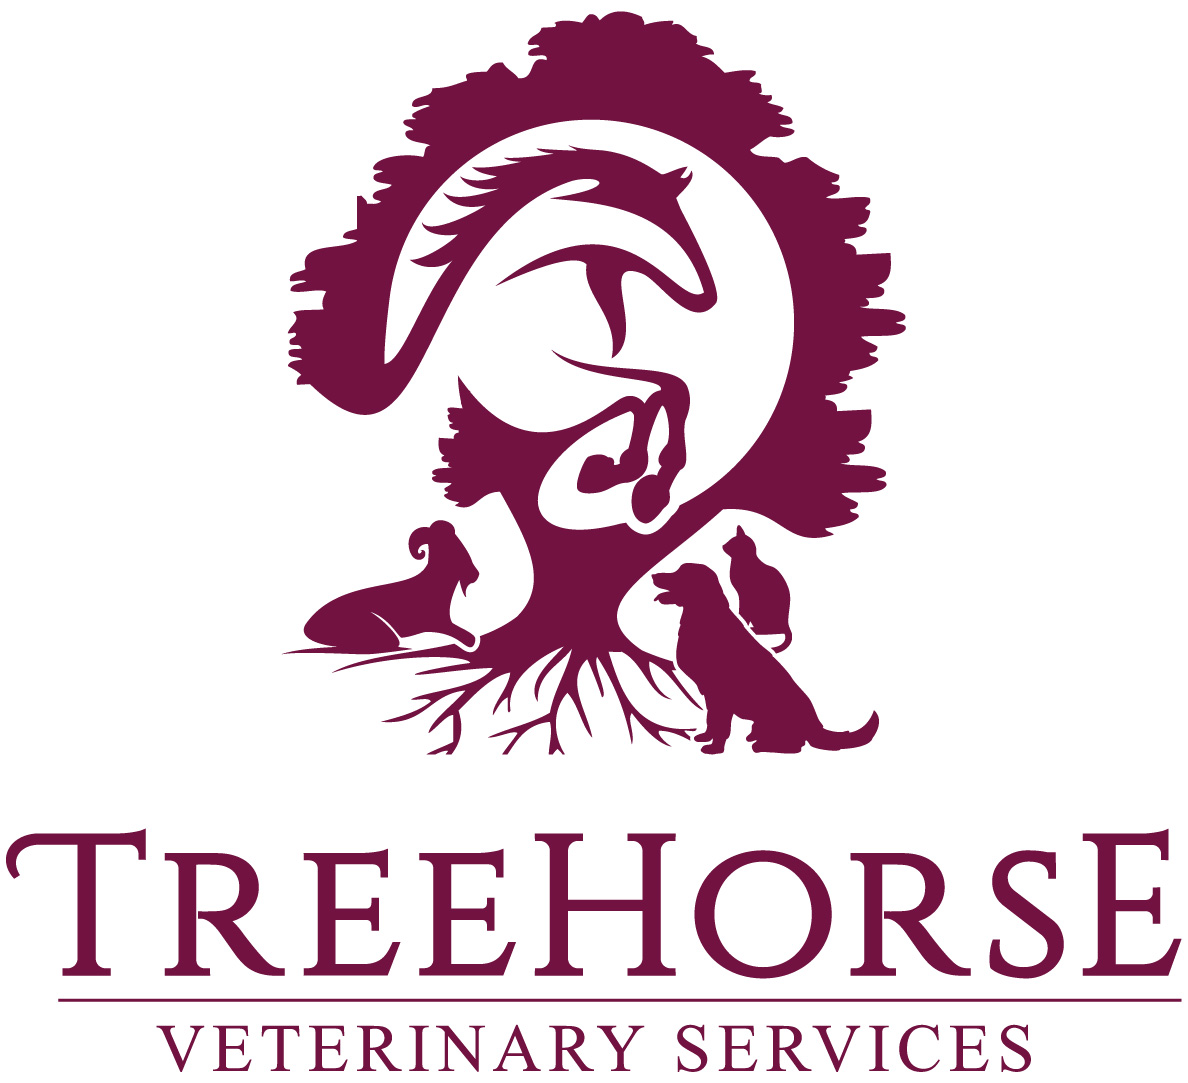 TreeHorse Veterinary Services